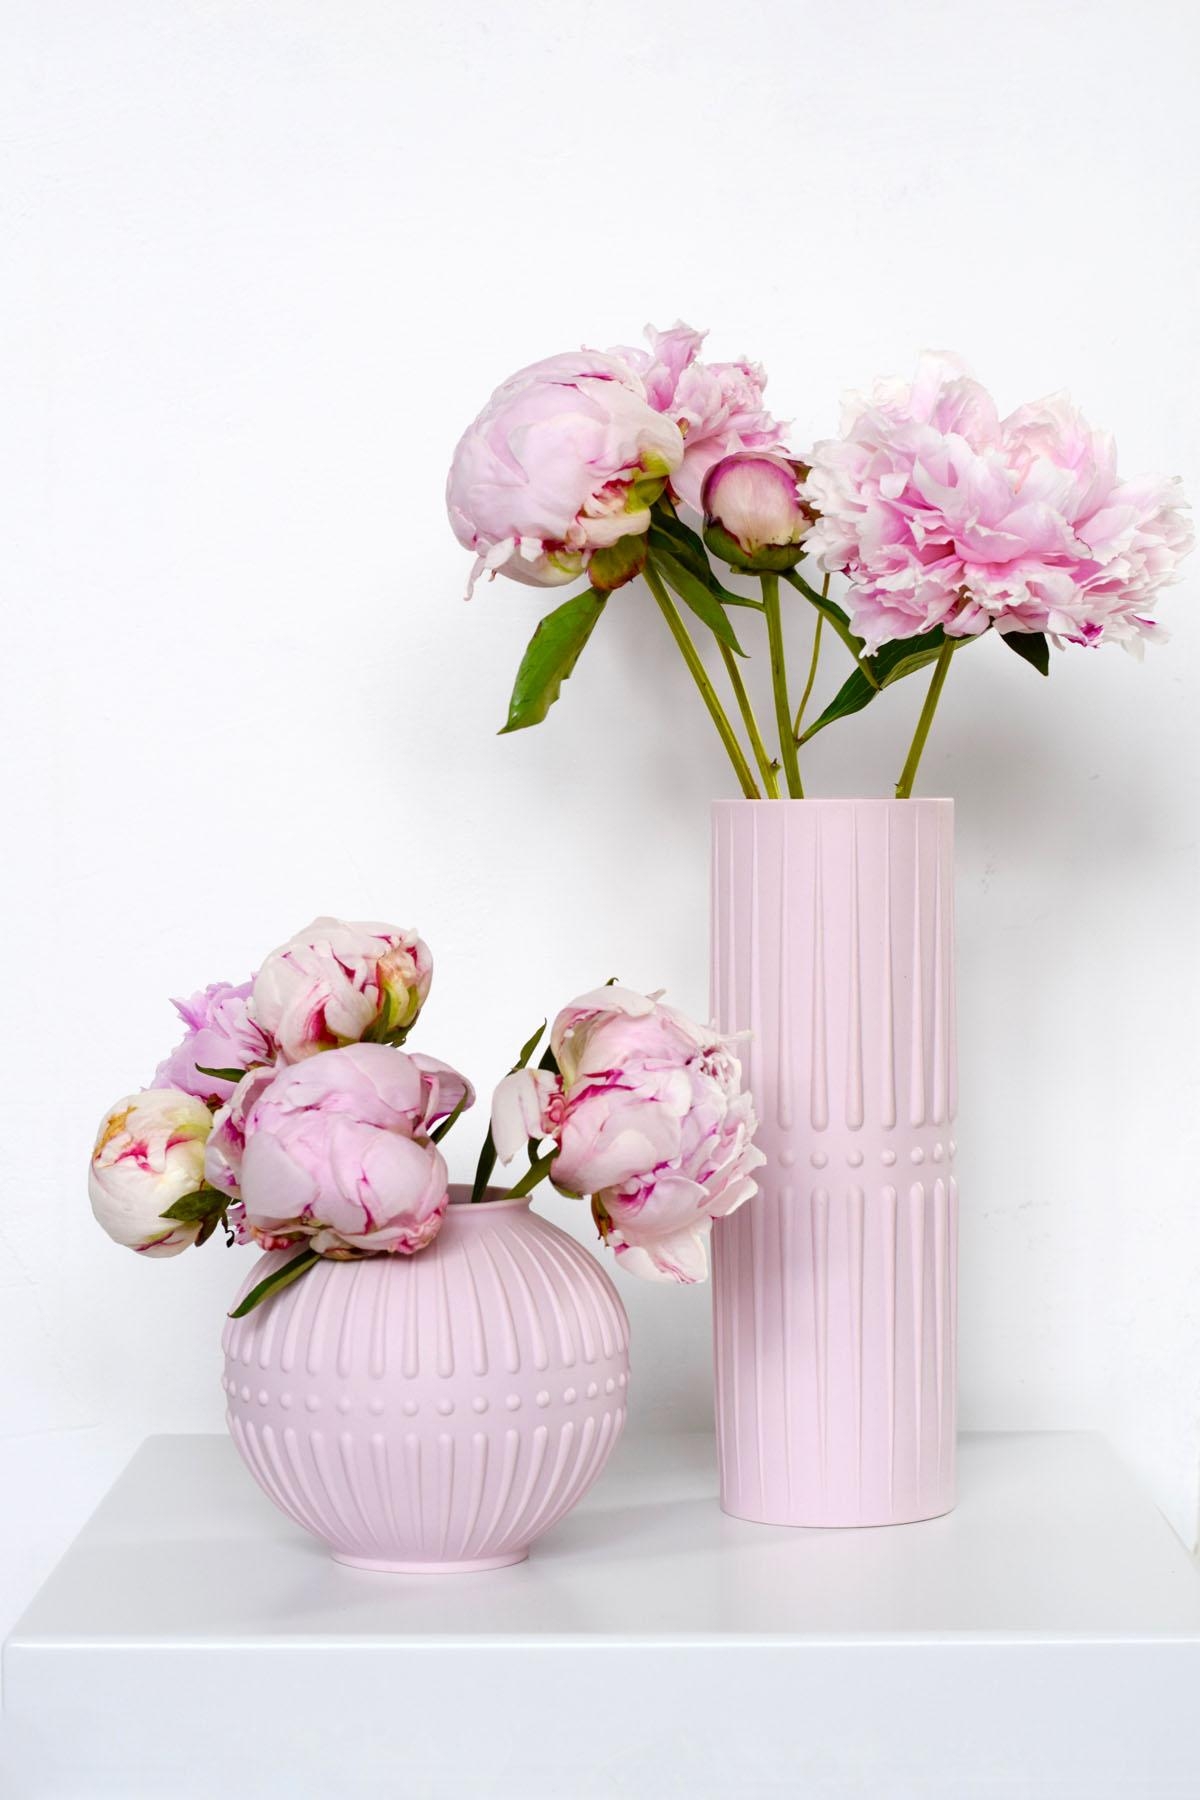 Himbeer-Softeis in Form von Pfingstrosen und Vasen.
#vintage #vasen #pfingstrosen 